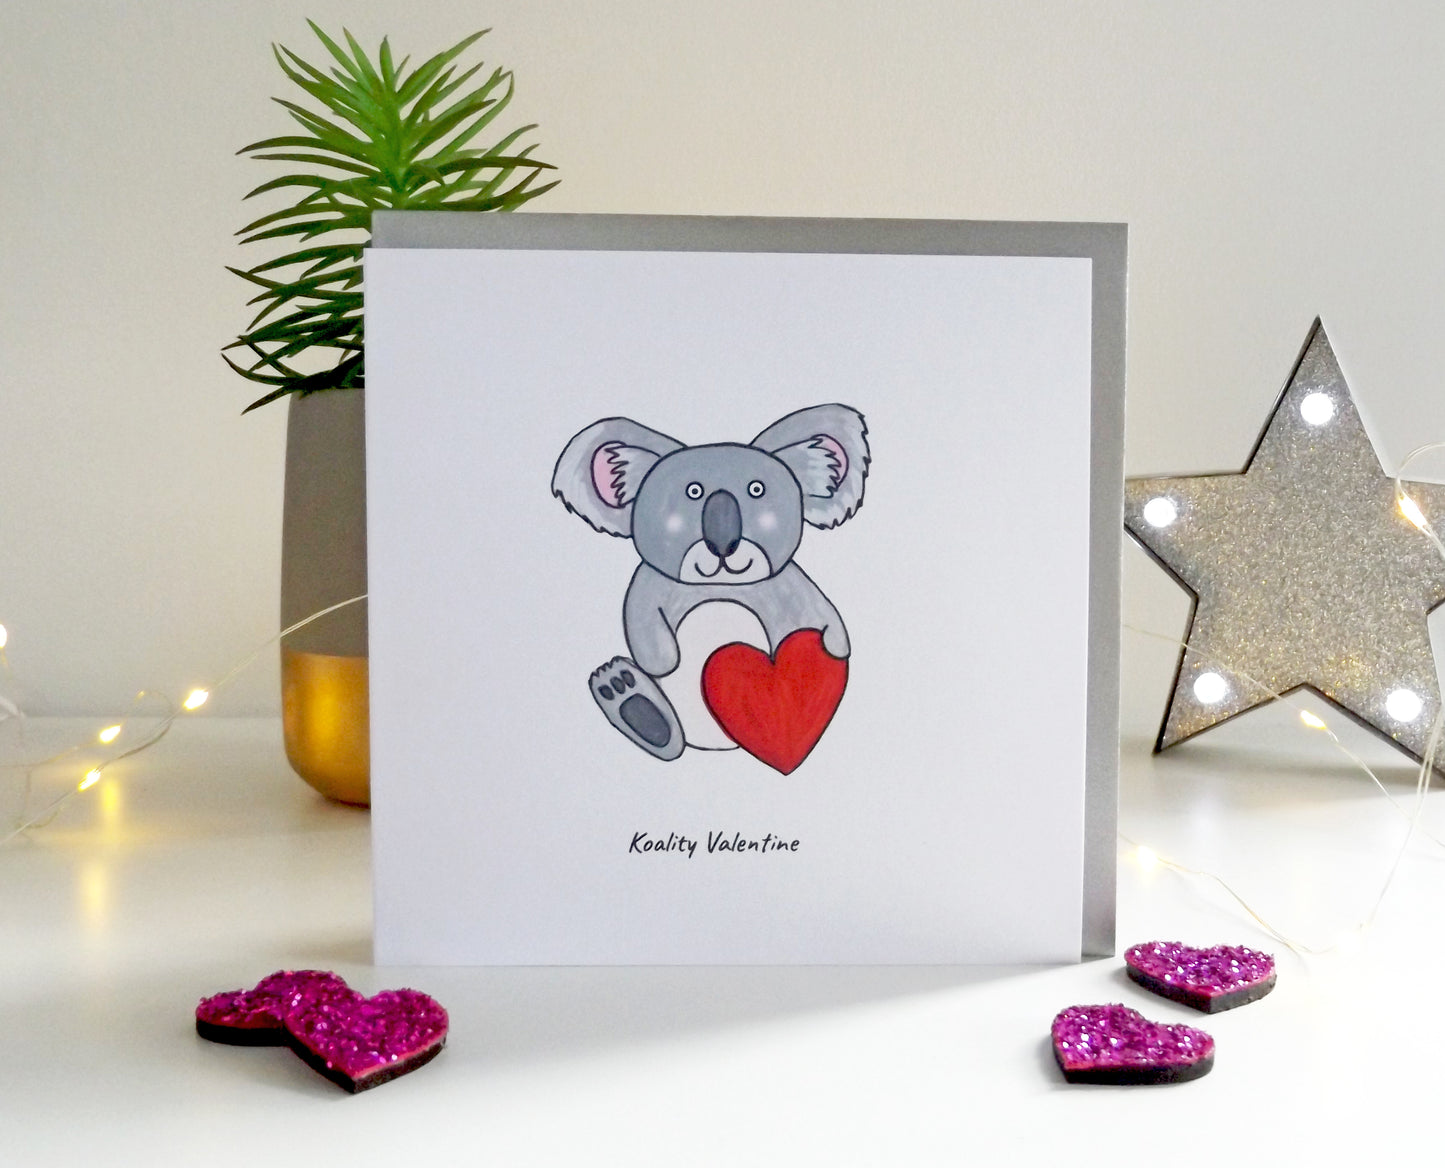 Koality Valentine - funny Koala valentine's card